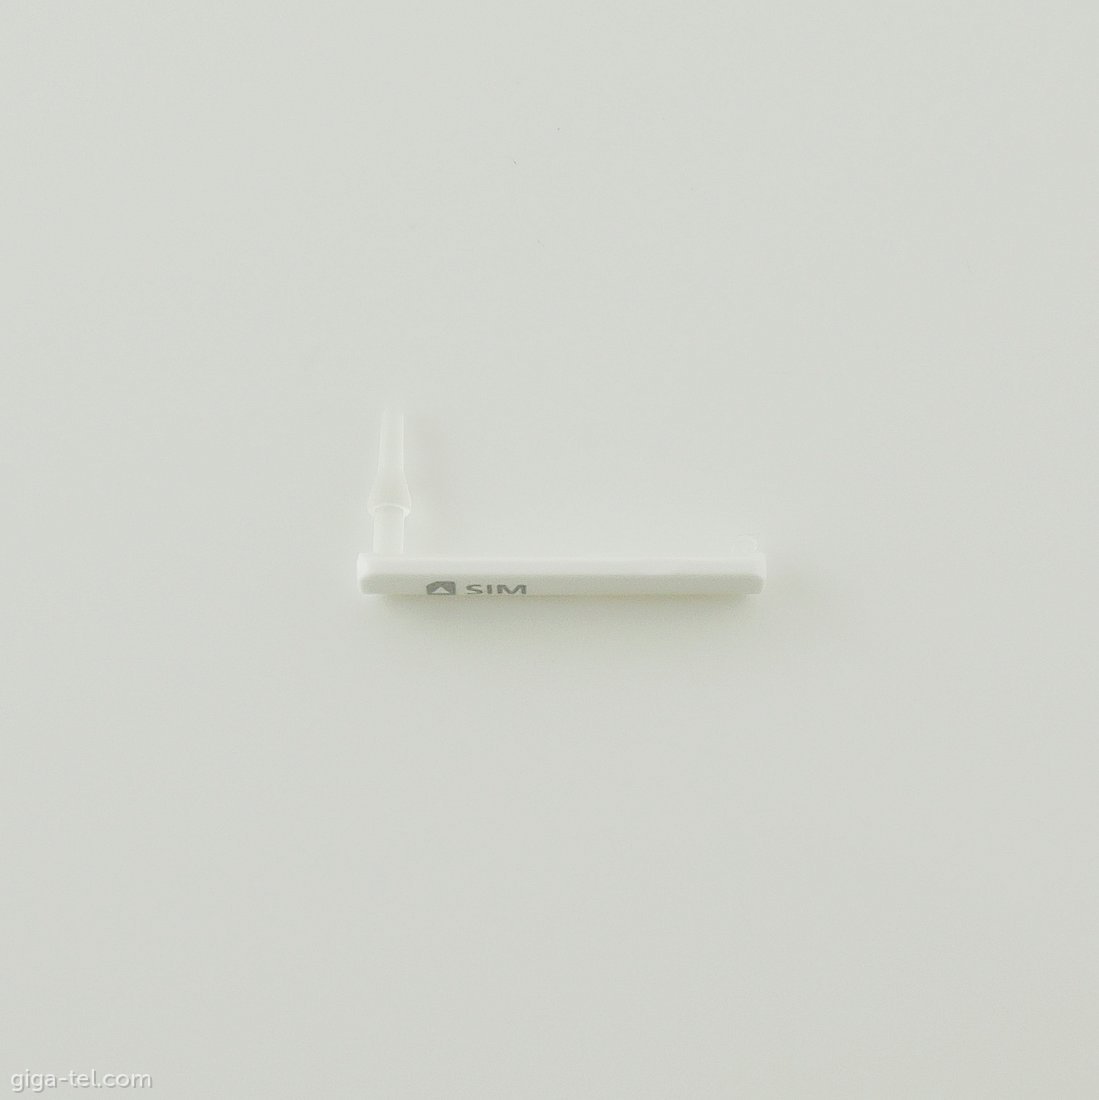 Samsung T116,T111 SIM cap white